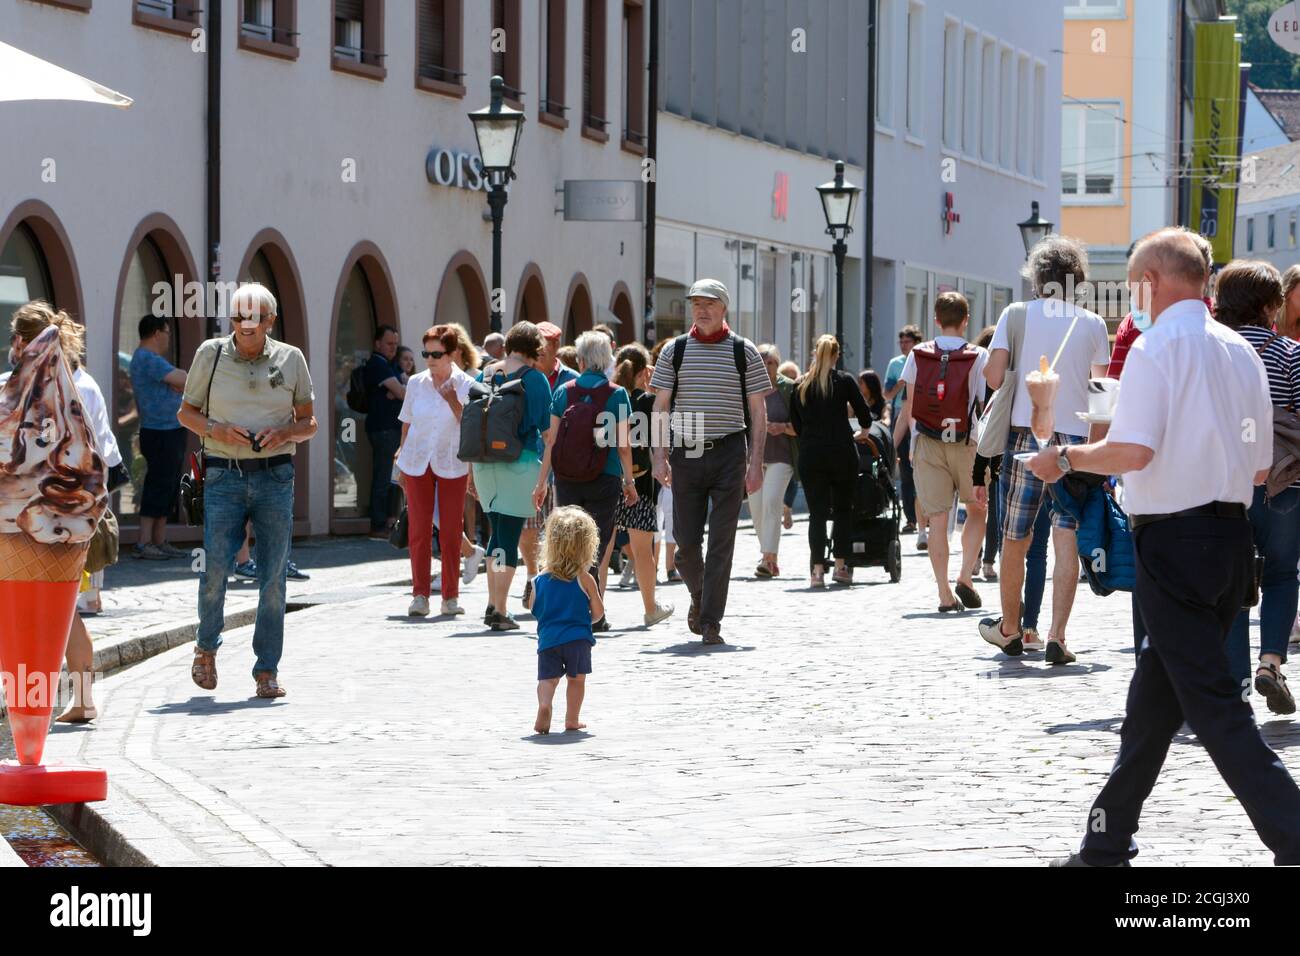 Freiburg im Breisgau, Rathausgasse with passers-by and barefoot child Stock Photo